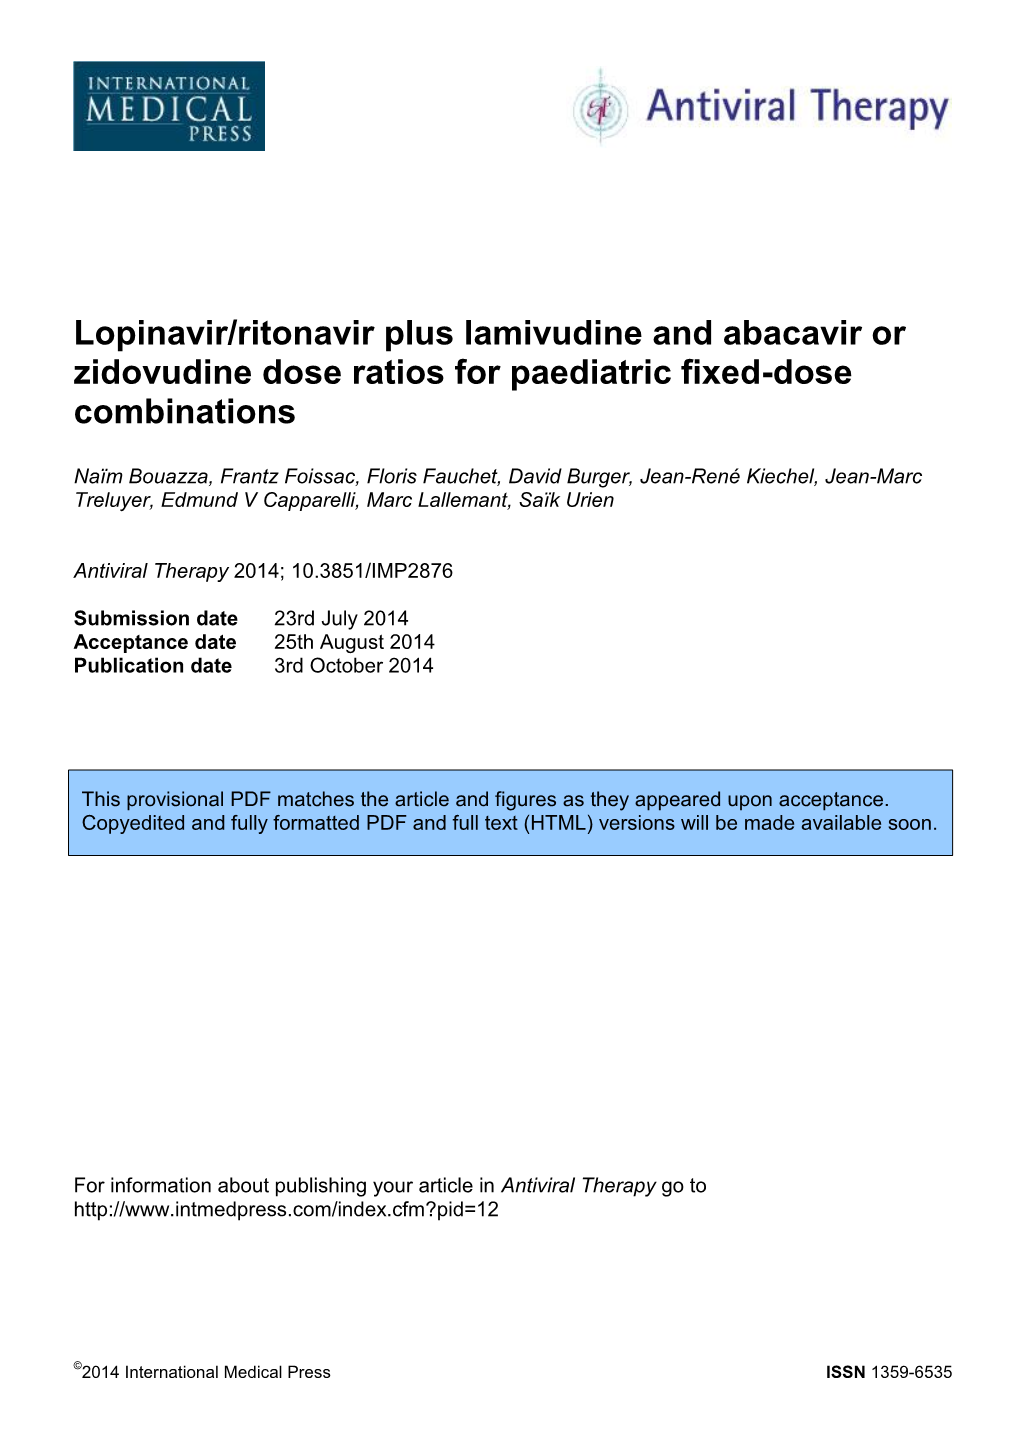 Lopinavir/Ritonavir Plus Lamivudine and Abacavir Or Zidovudine Dose Ratios for Paediatric Fixed-Dose Combinations